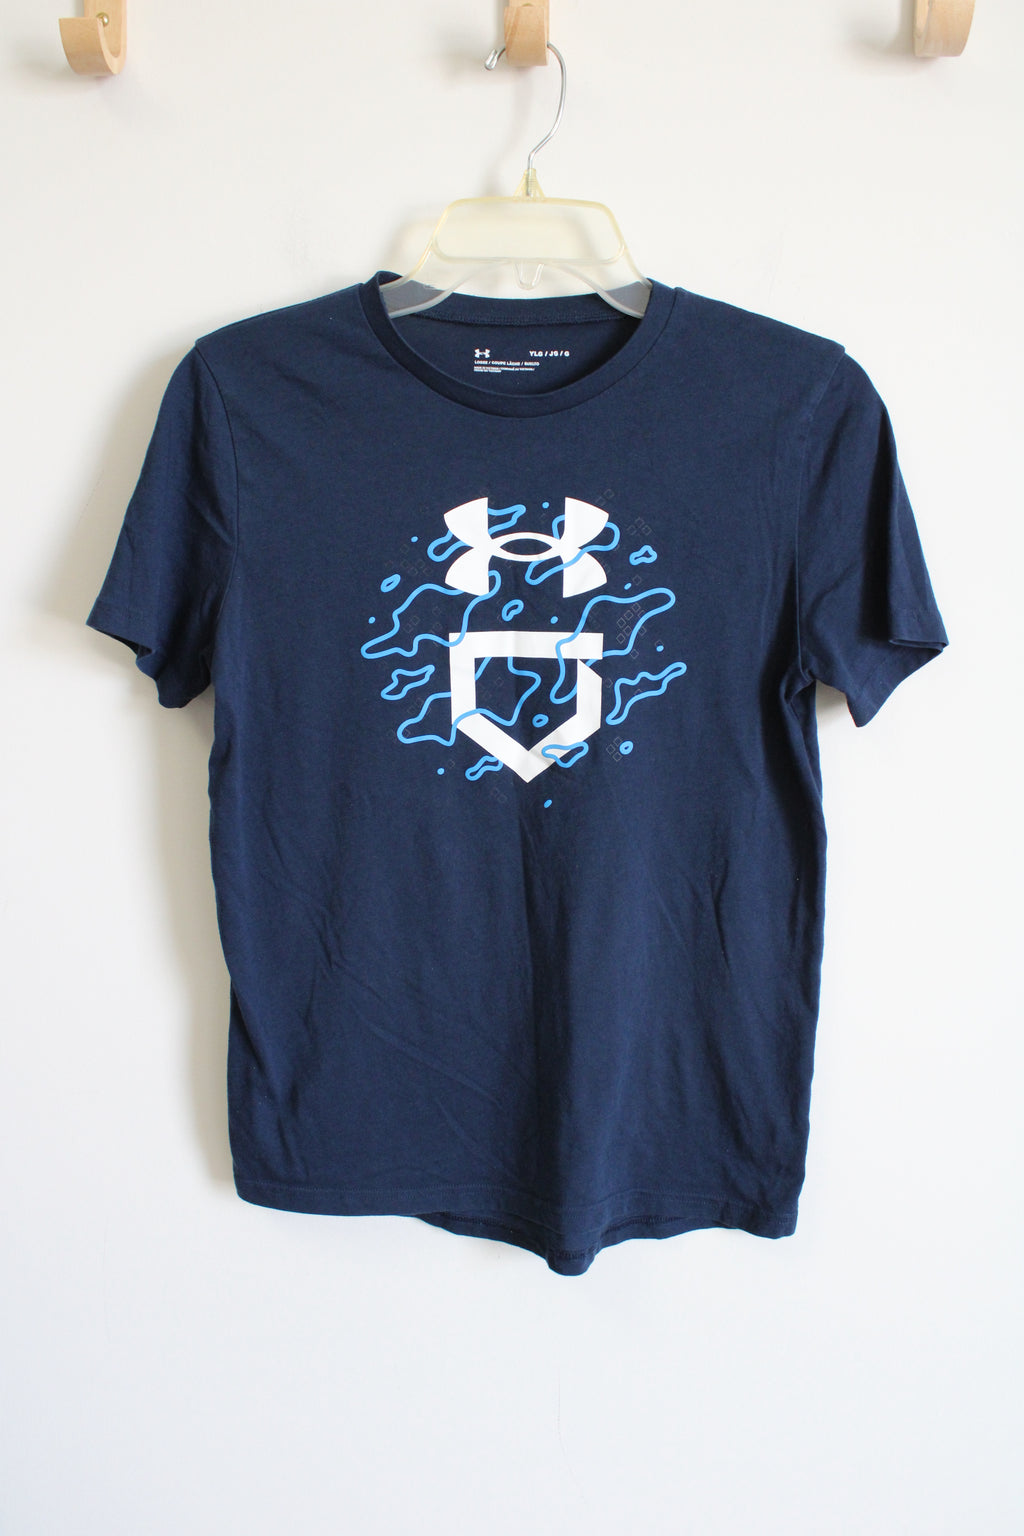 Under Armour Dark Blue Logo Shirt | Youth L (14/16)